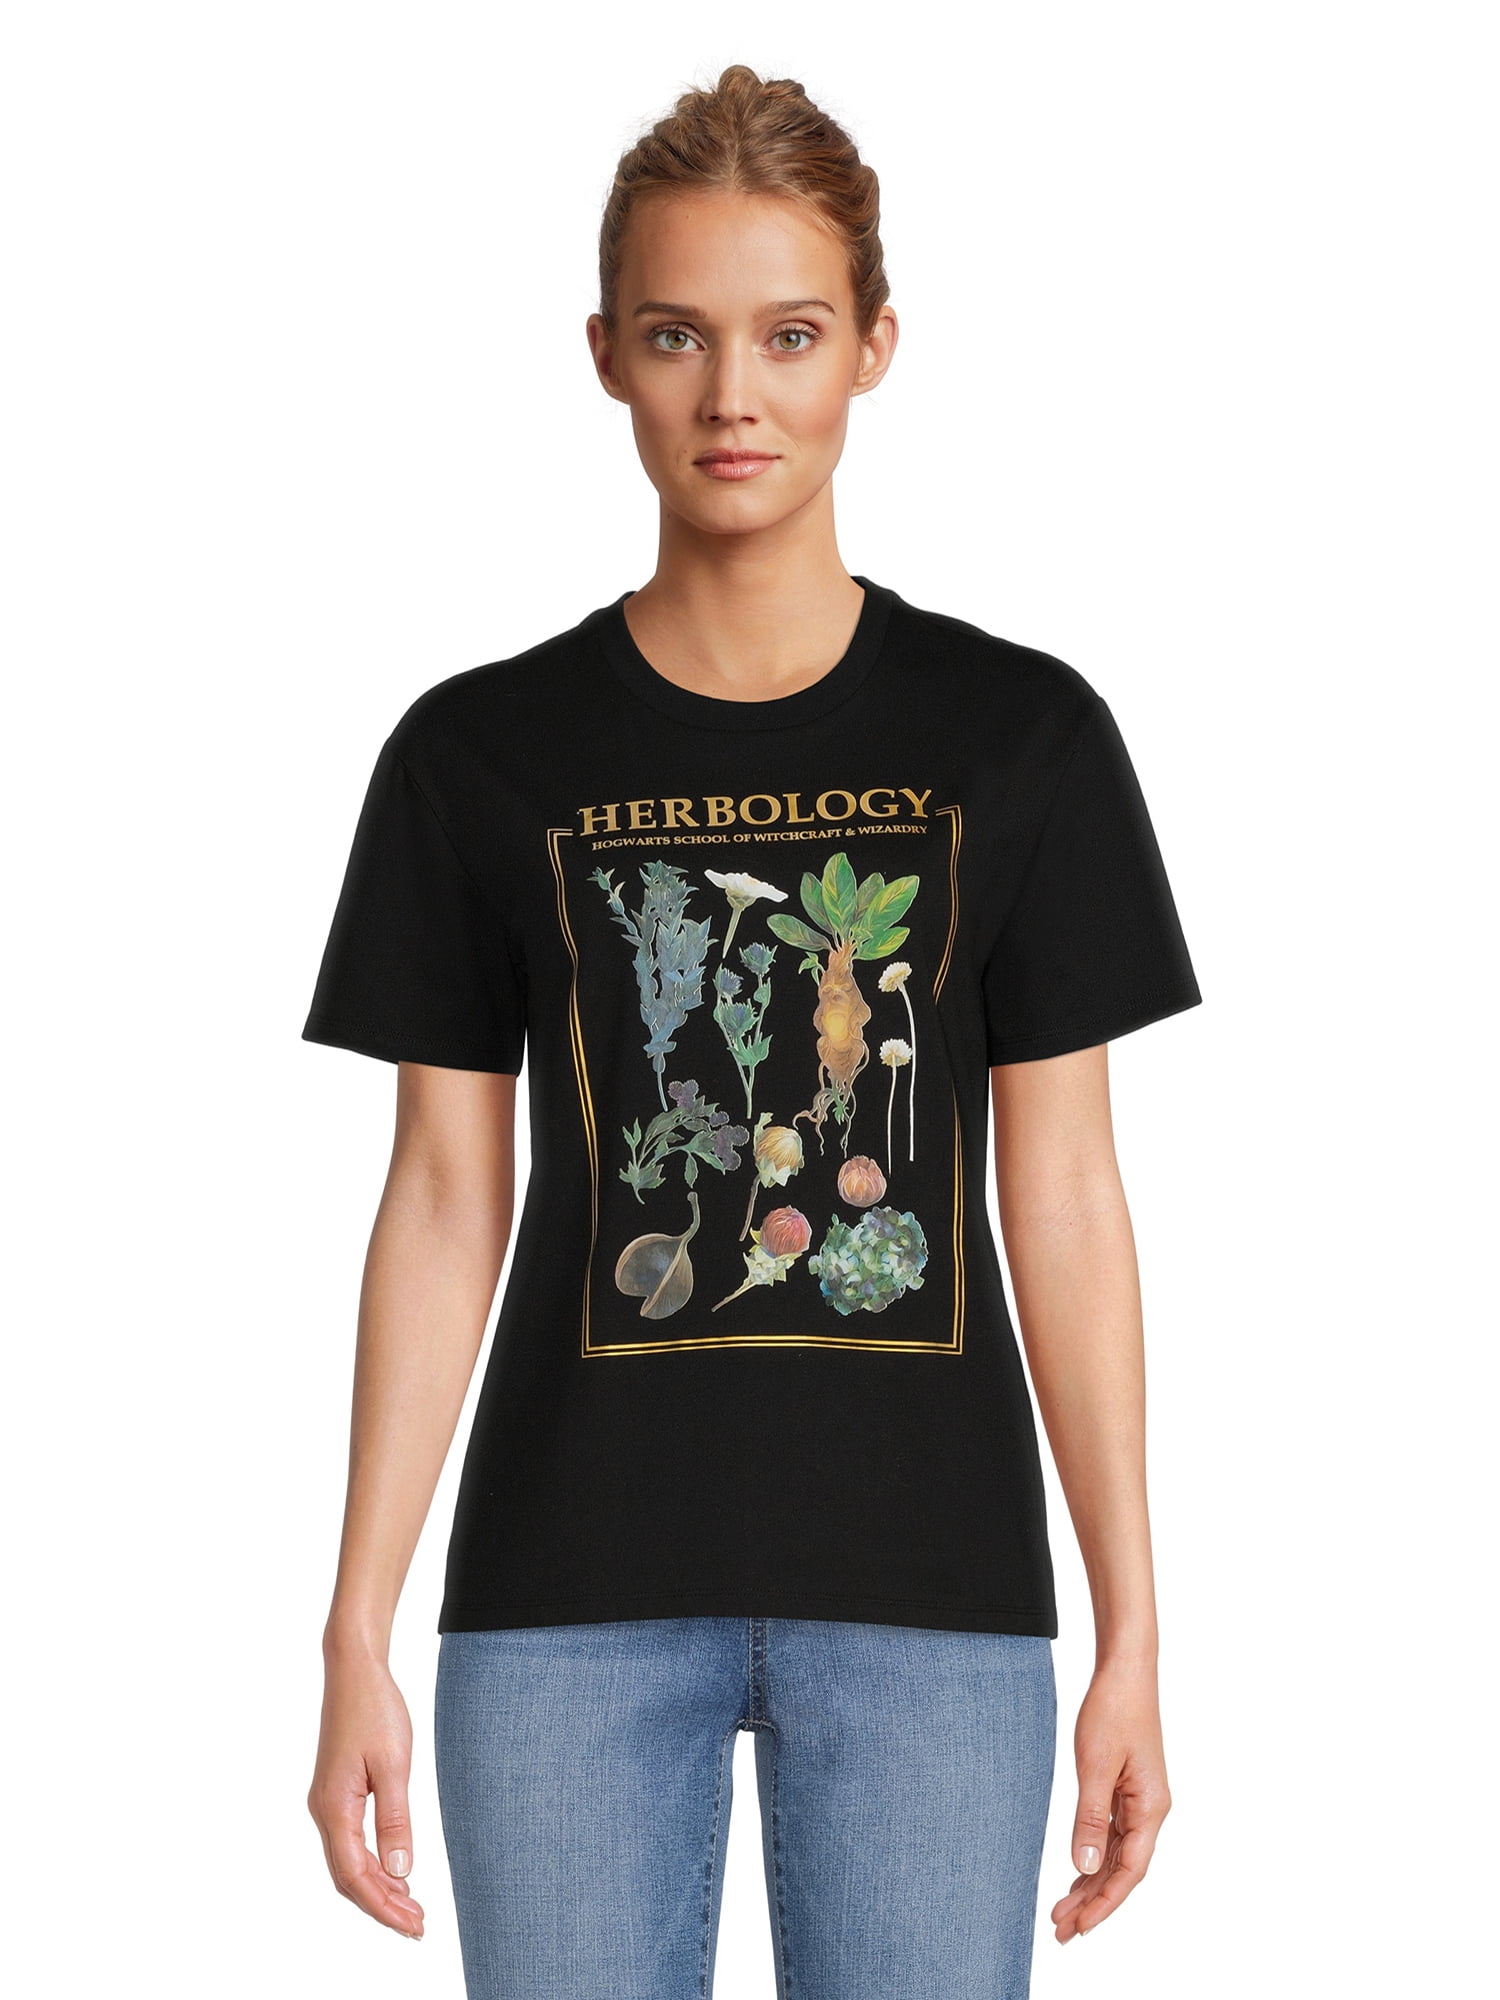 Harry Potter Juniors Herbology Boyfriend Graphic T-Shirt, Sizes XS-3XL